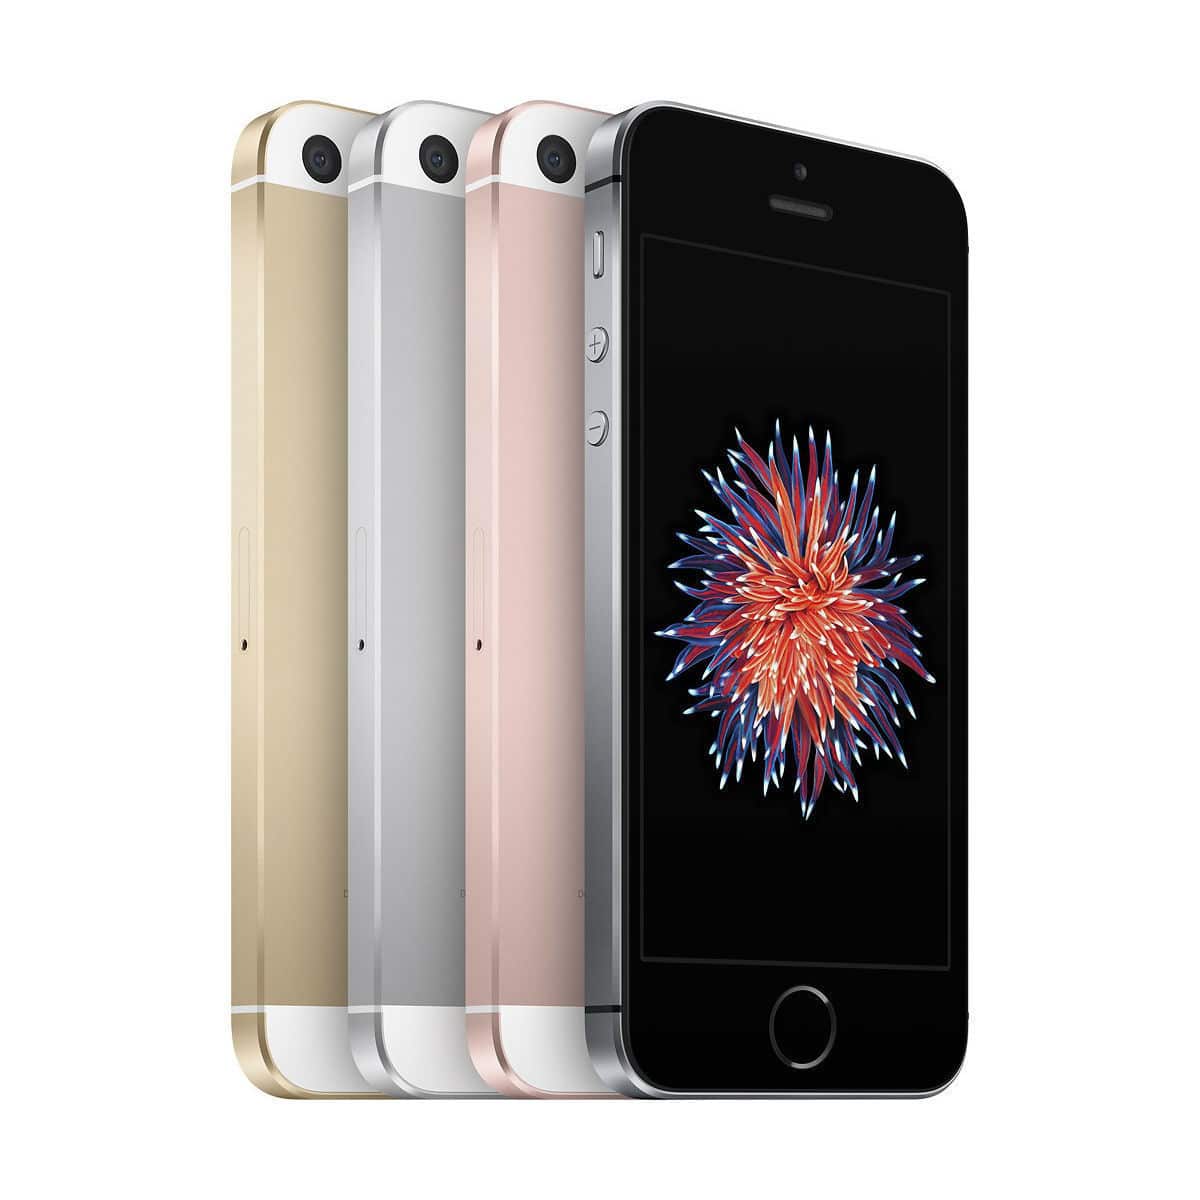 Refurbished unlocked Apple iPhone SE 64GB GSM smartphone for $210 ...